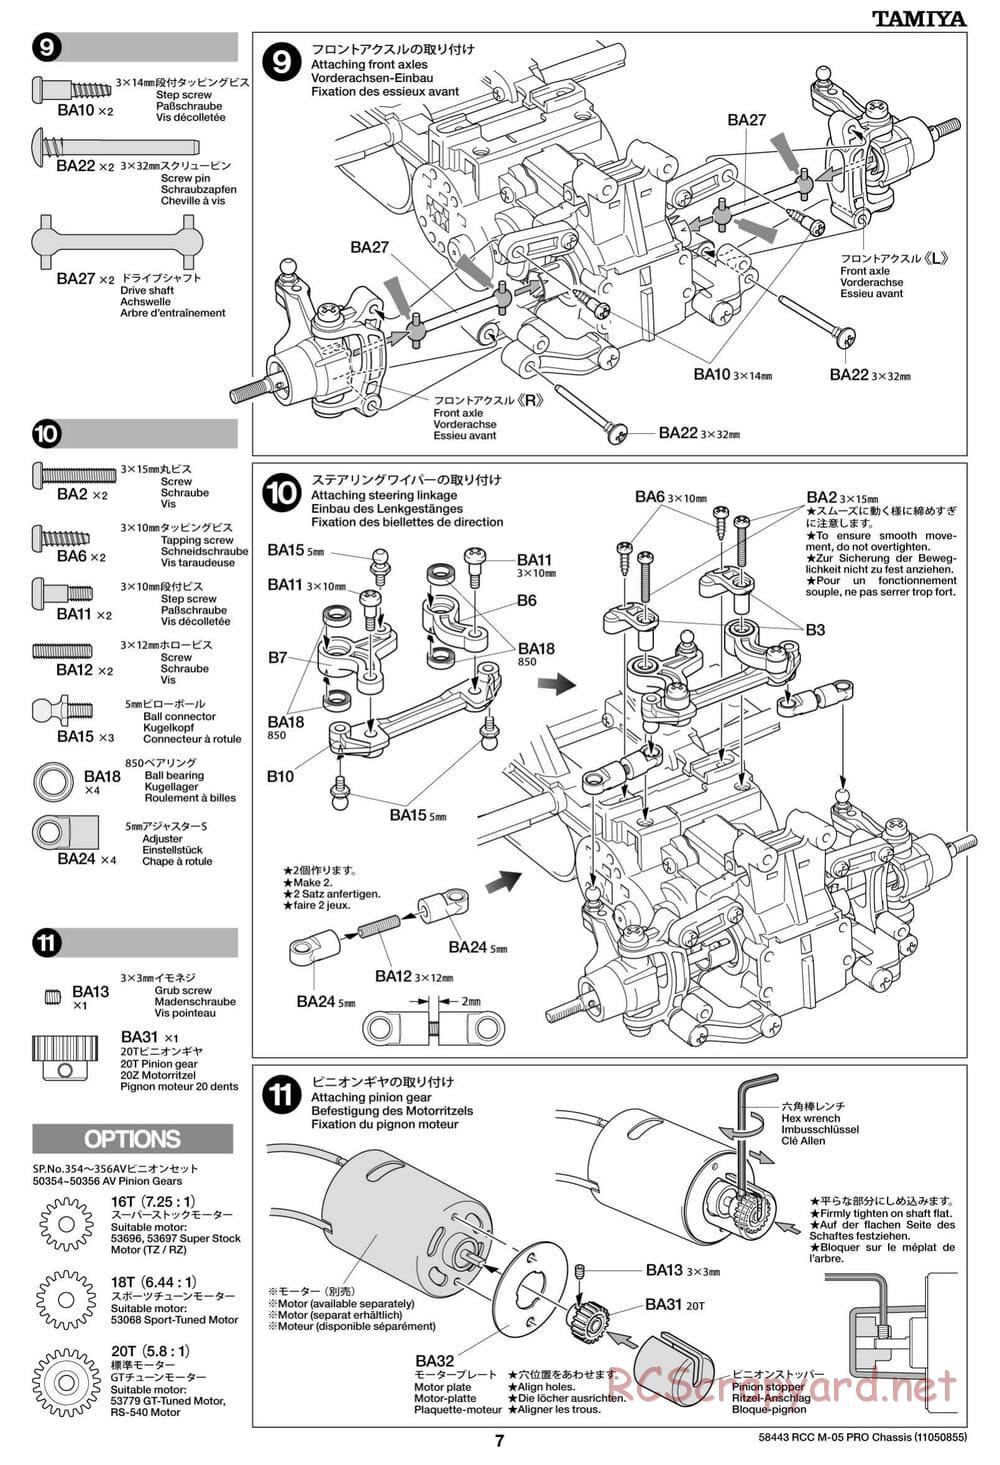 Tamiya - M05-Pro Chassis - Manual - Page 7